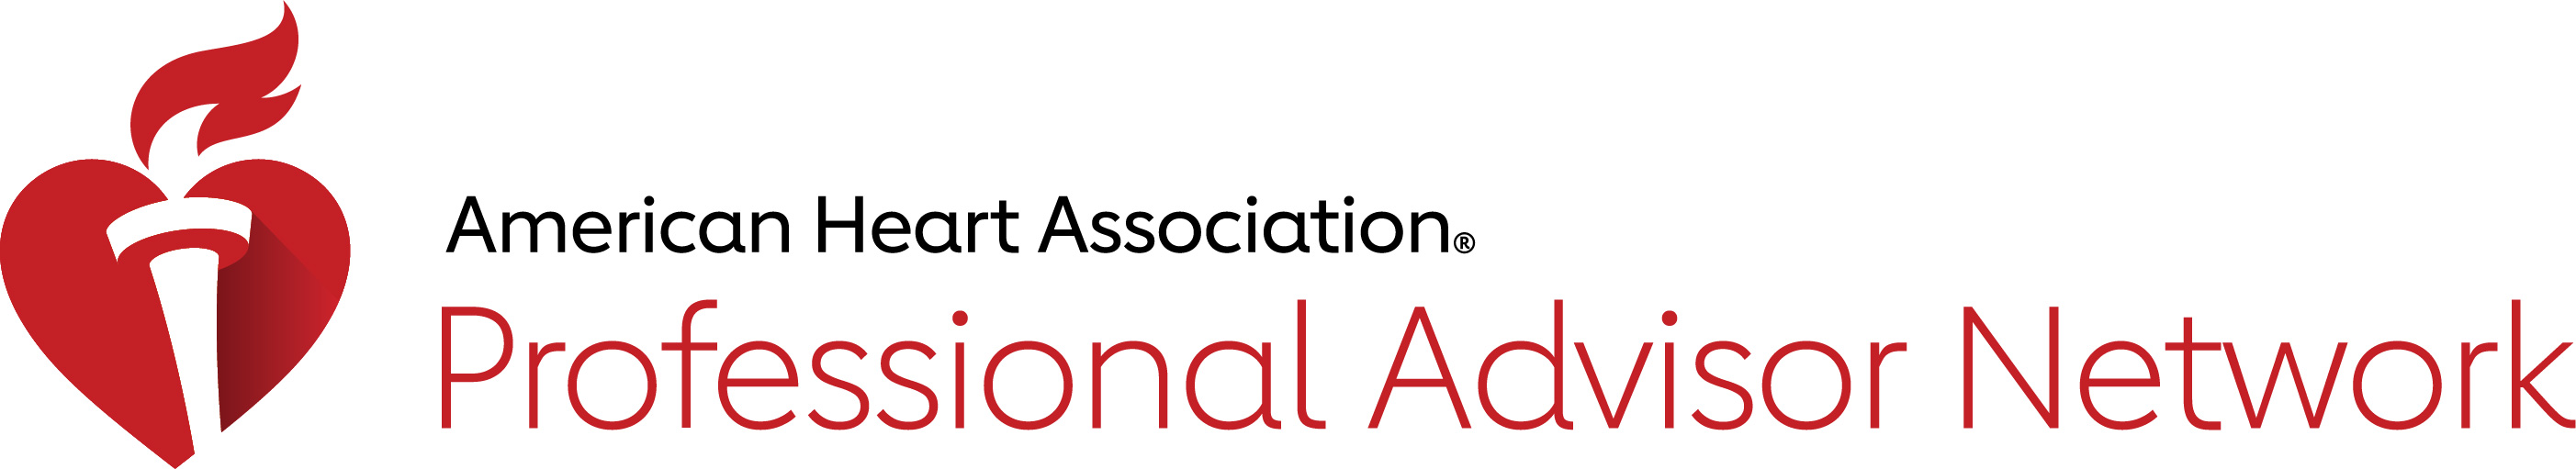 Professional Advisor Network Logo